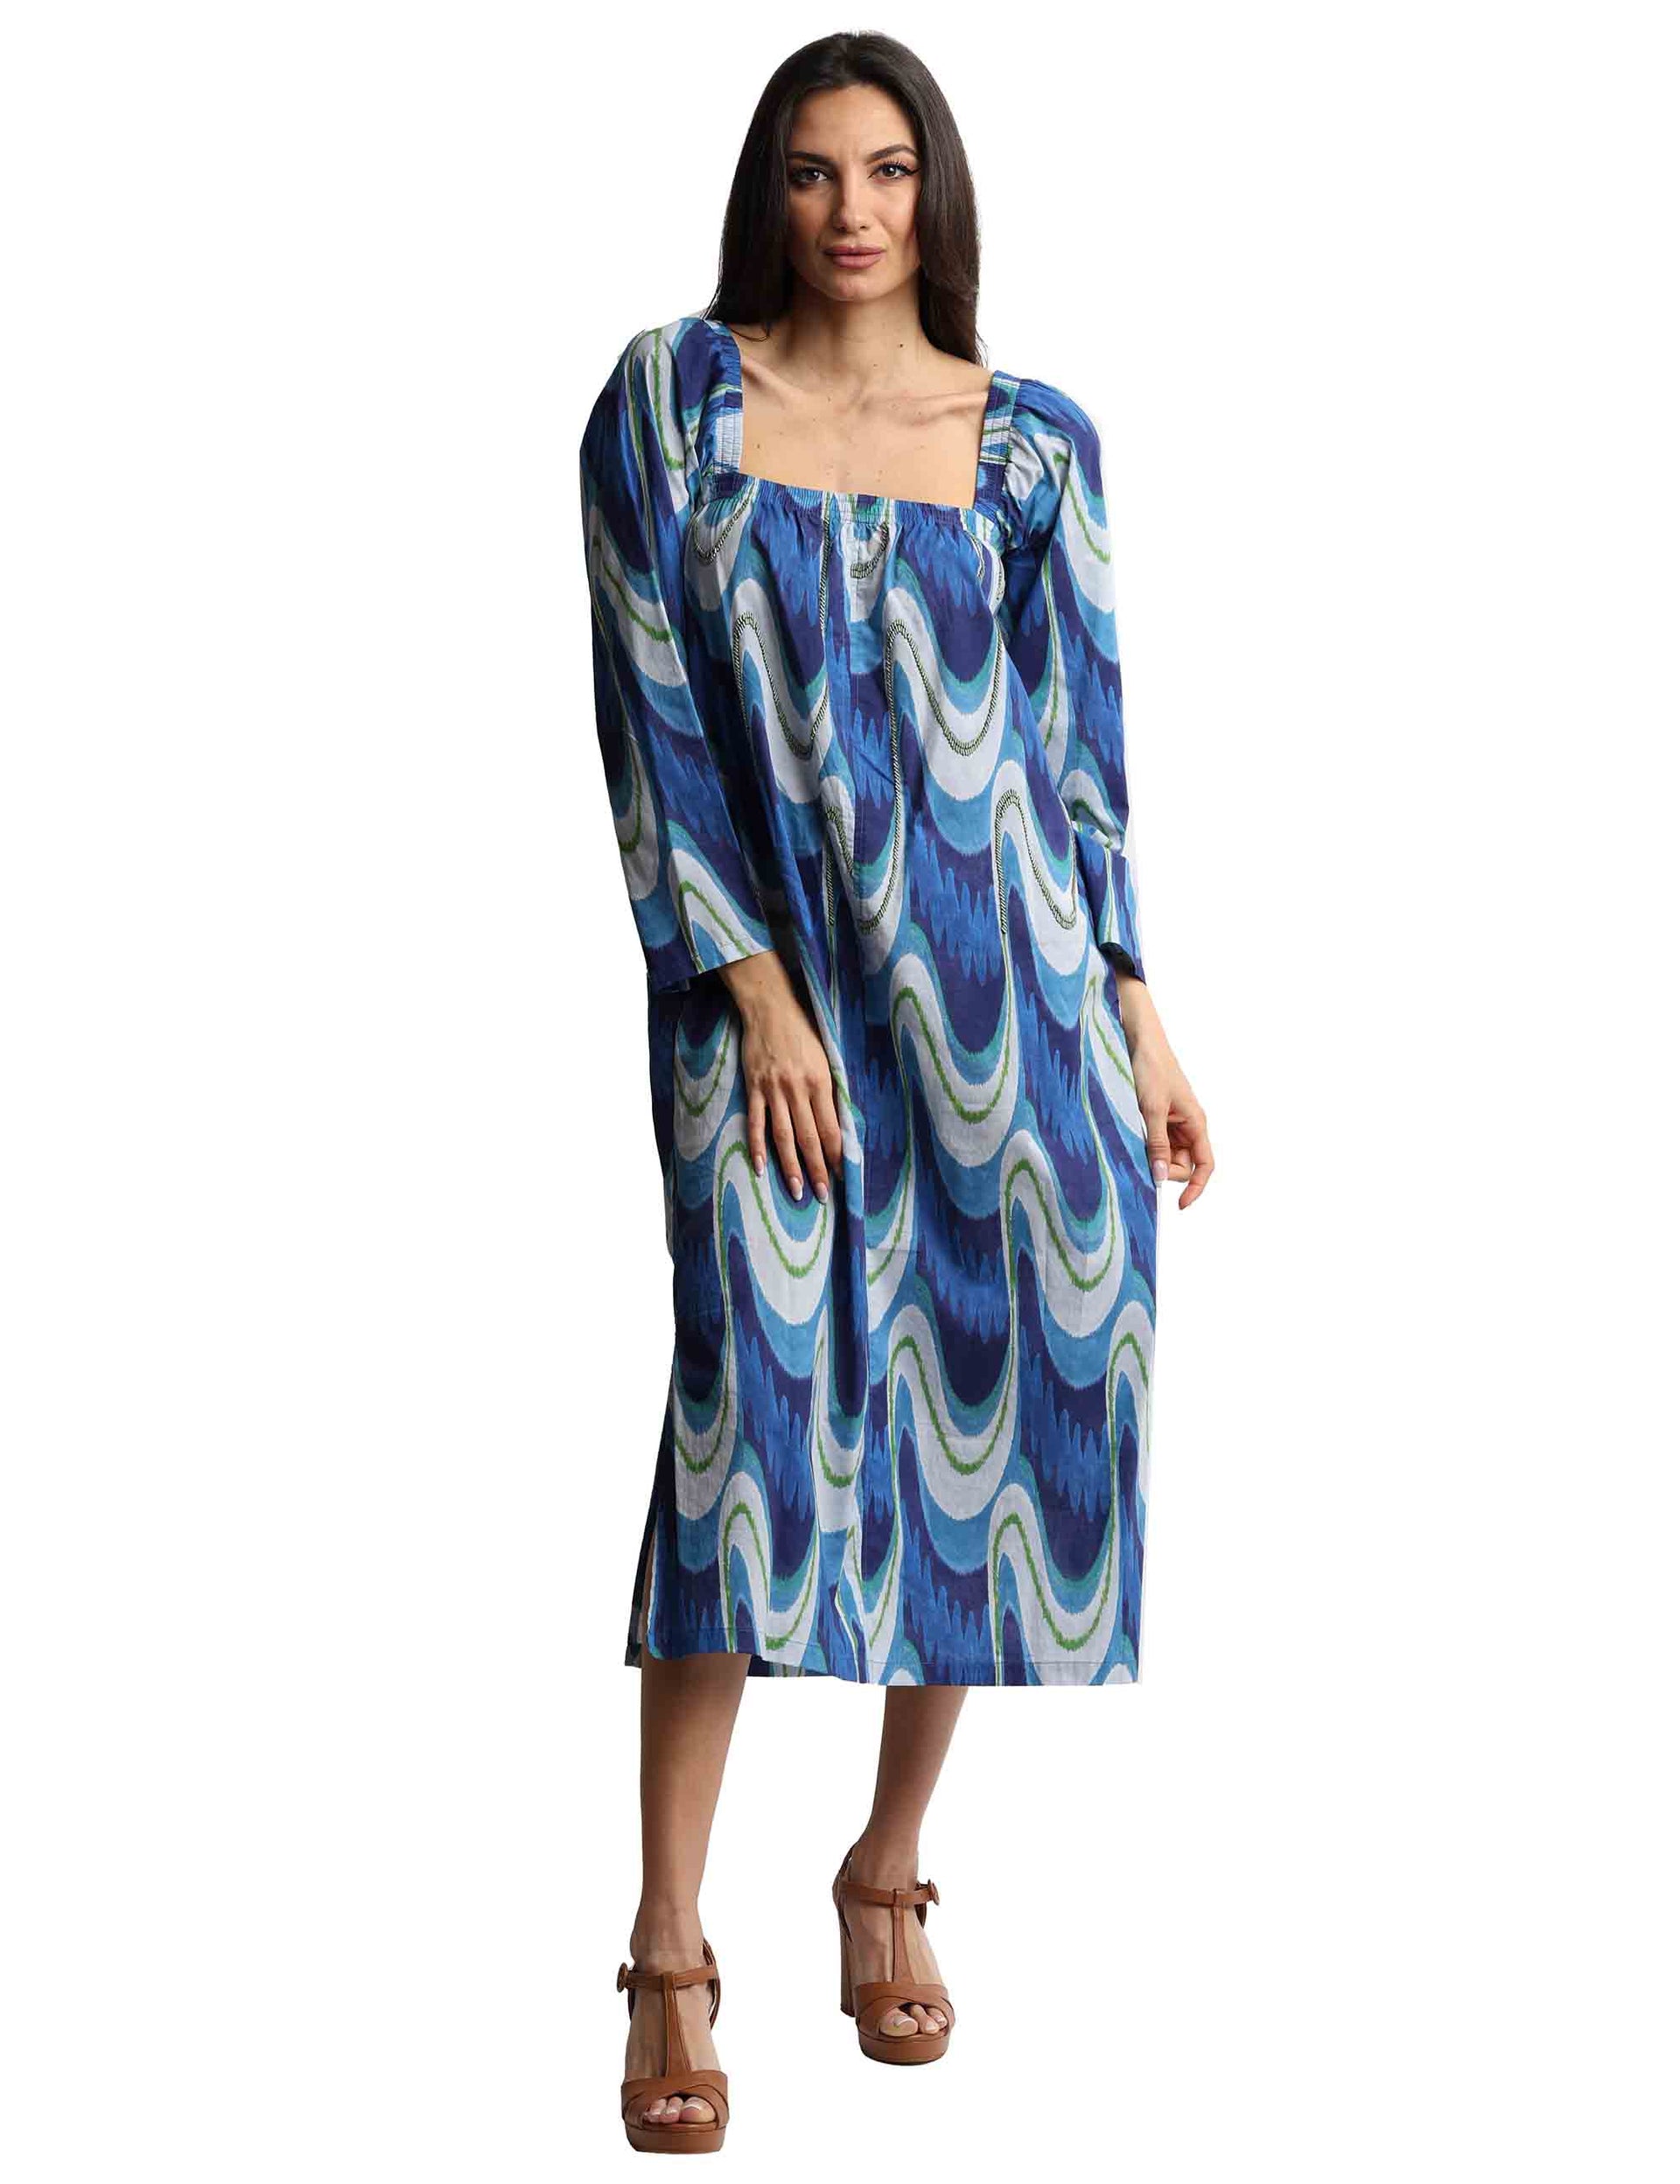 Ikat Wave Muslin women's dresses in blue and light blue cotton